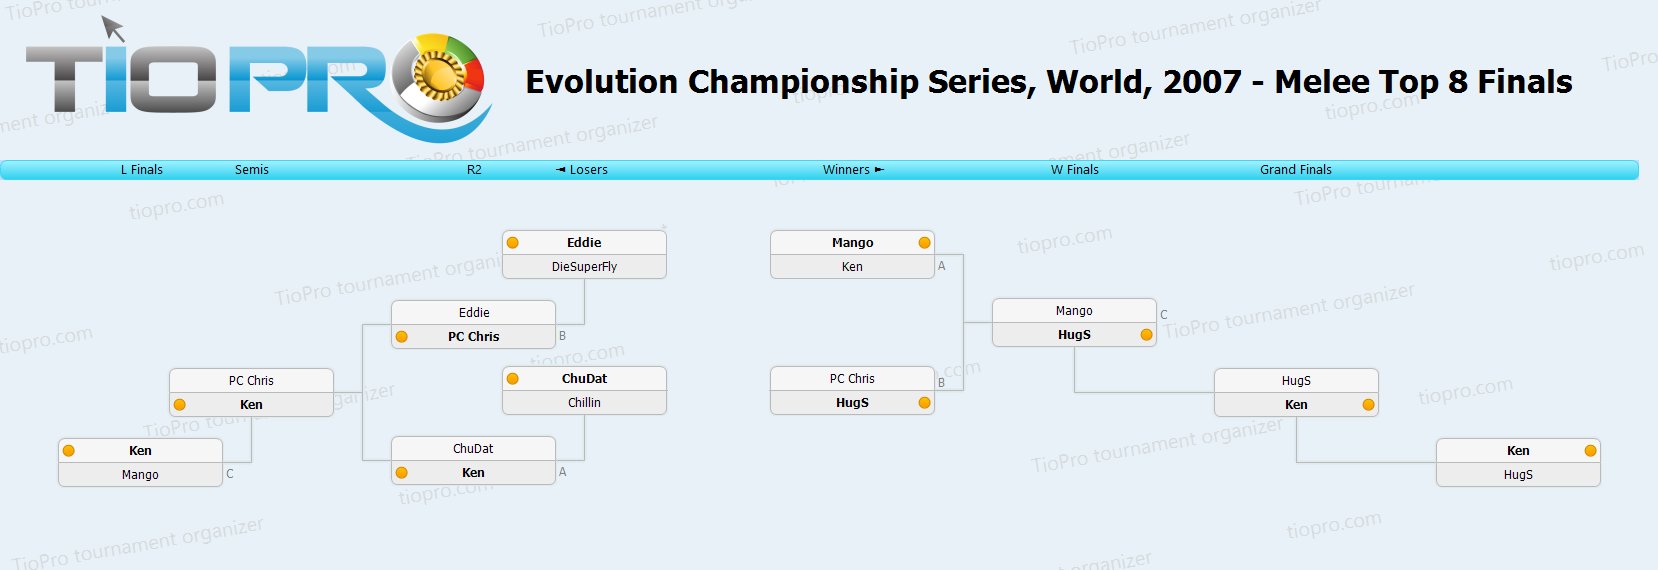 Evolution Championship Series, World, 2007: Melee Singles Top 42